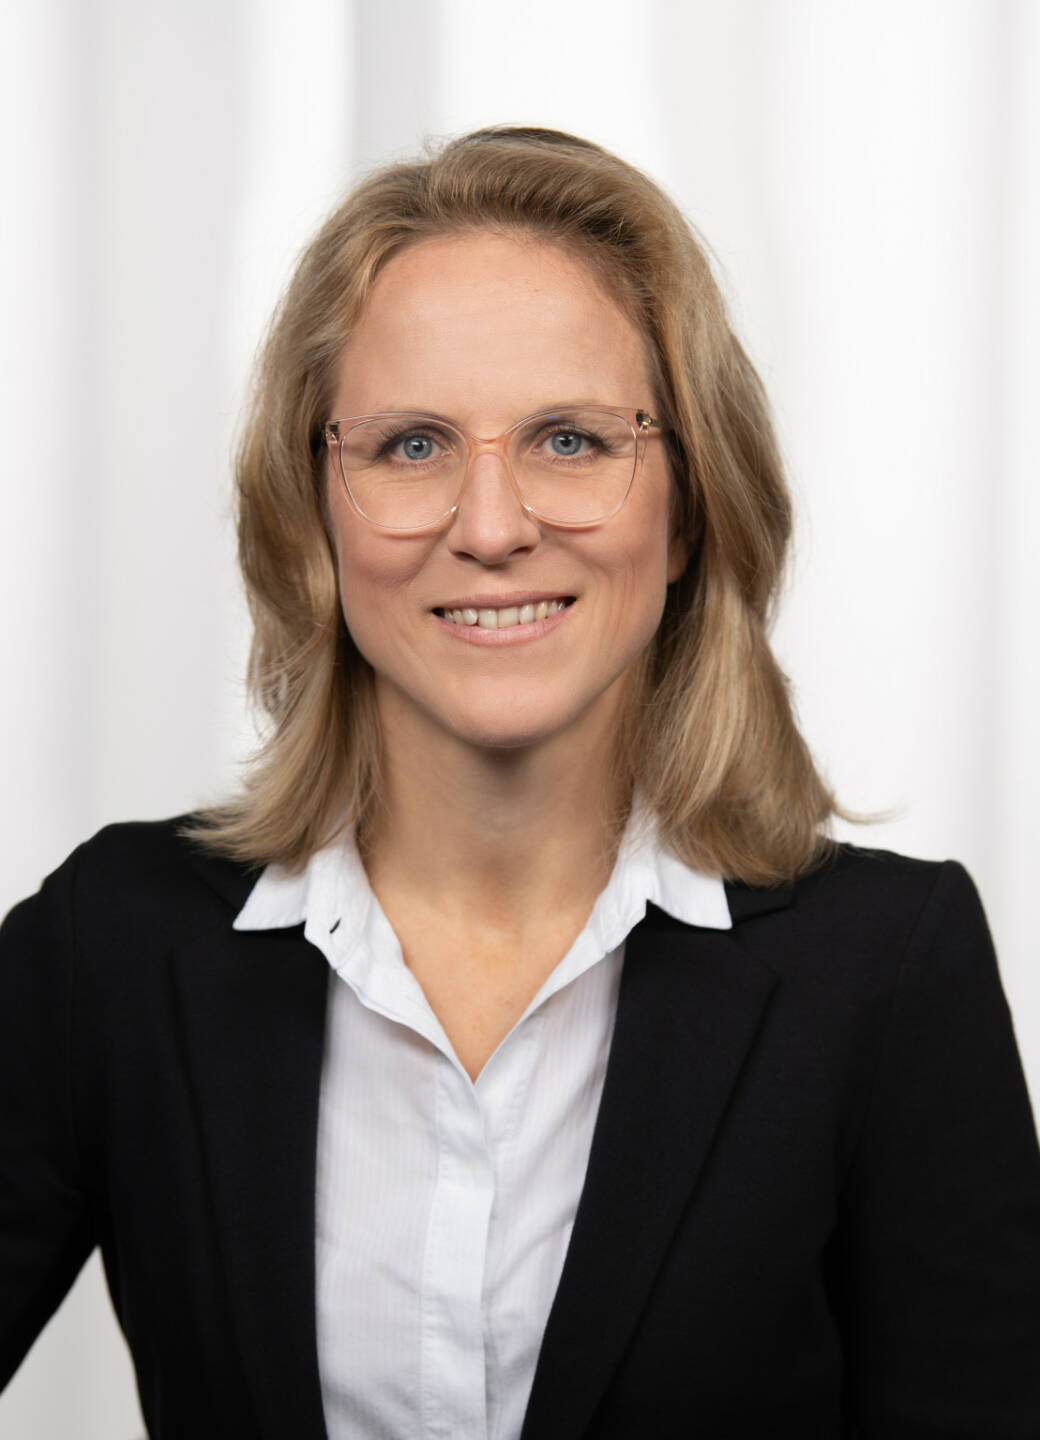 Alexandra Schwaiger-Faber ab sofort neue Leiterin der Rechtsabteilung der E-Control; Credit: E-Control / Georg WILKE